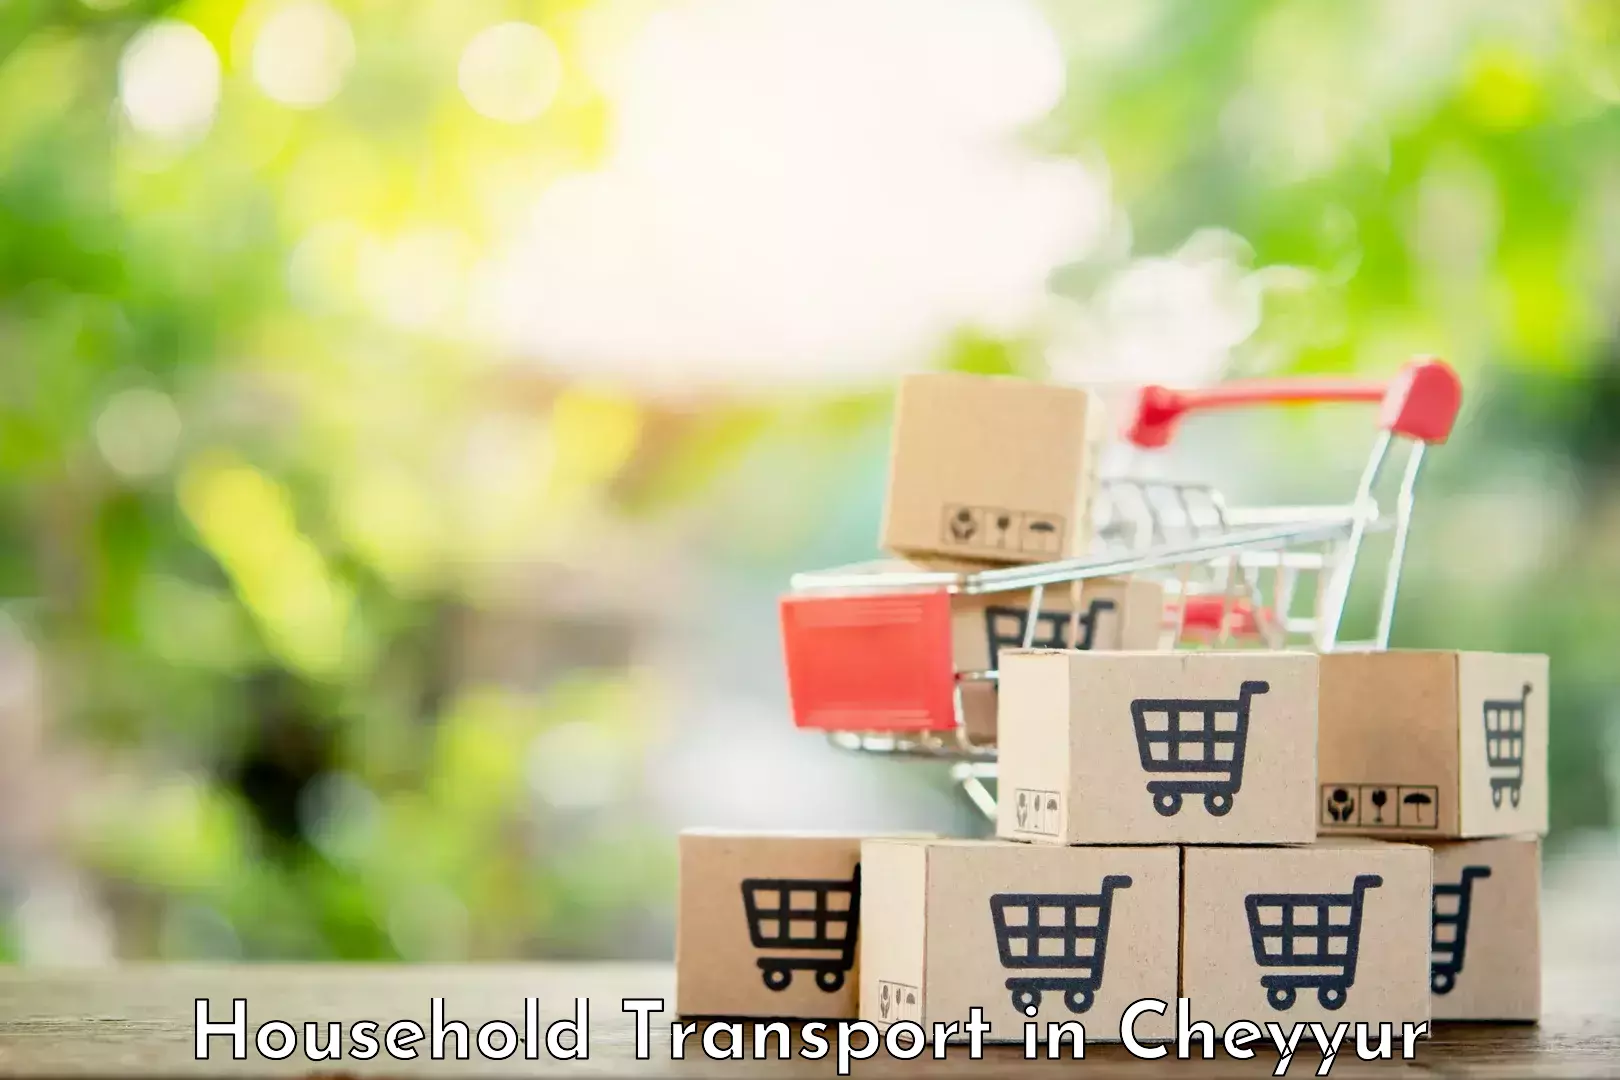 Professional goods transport in Cheyyur